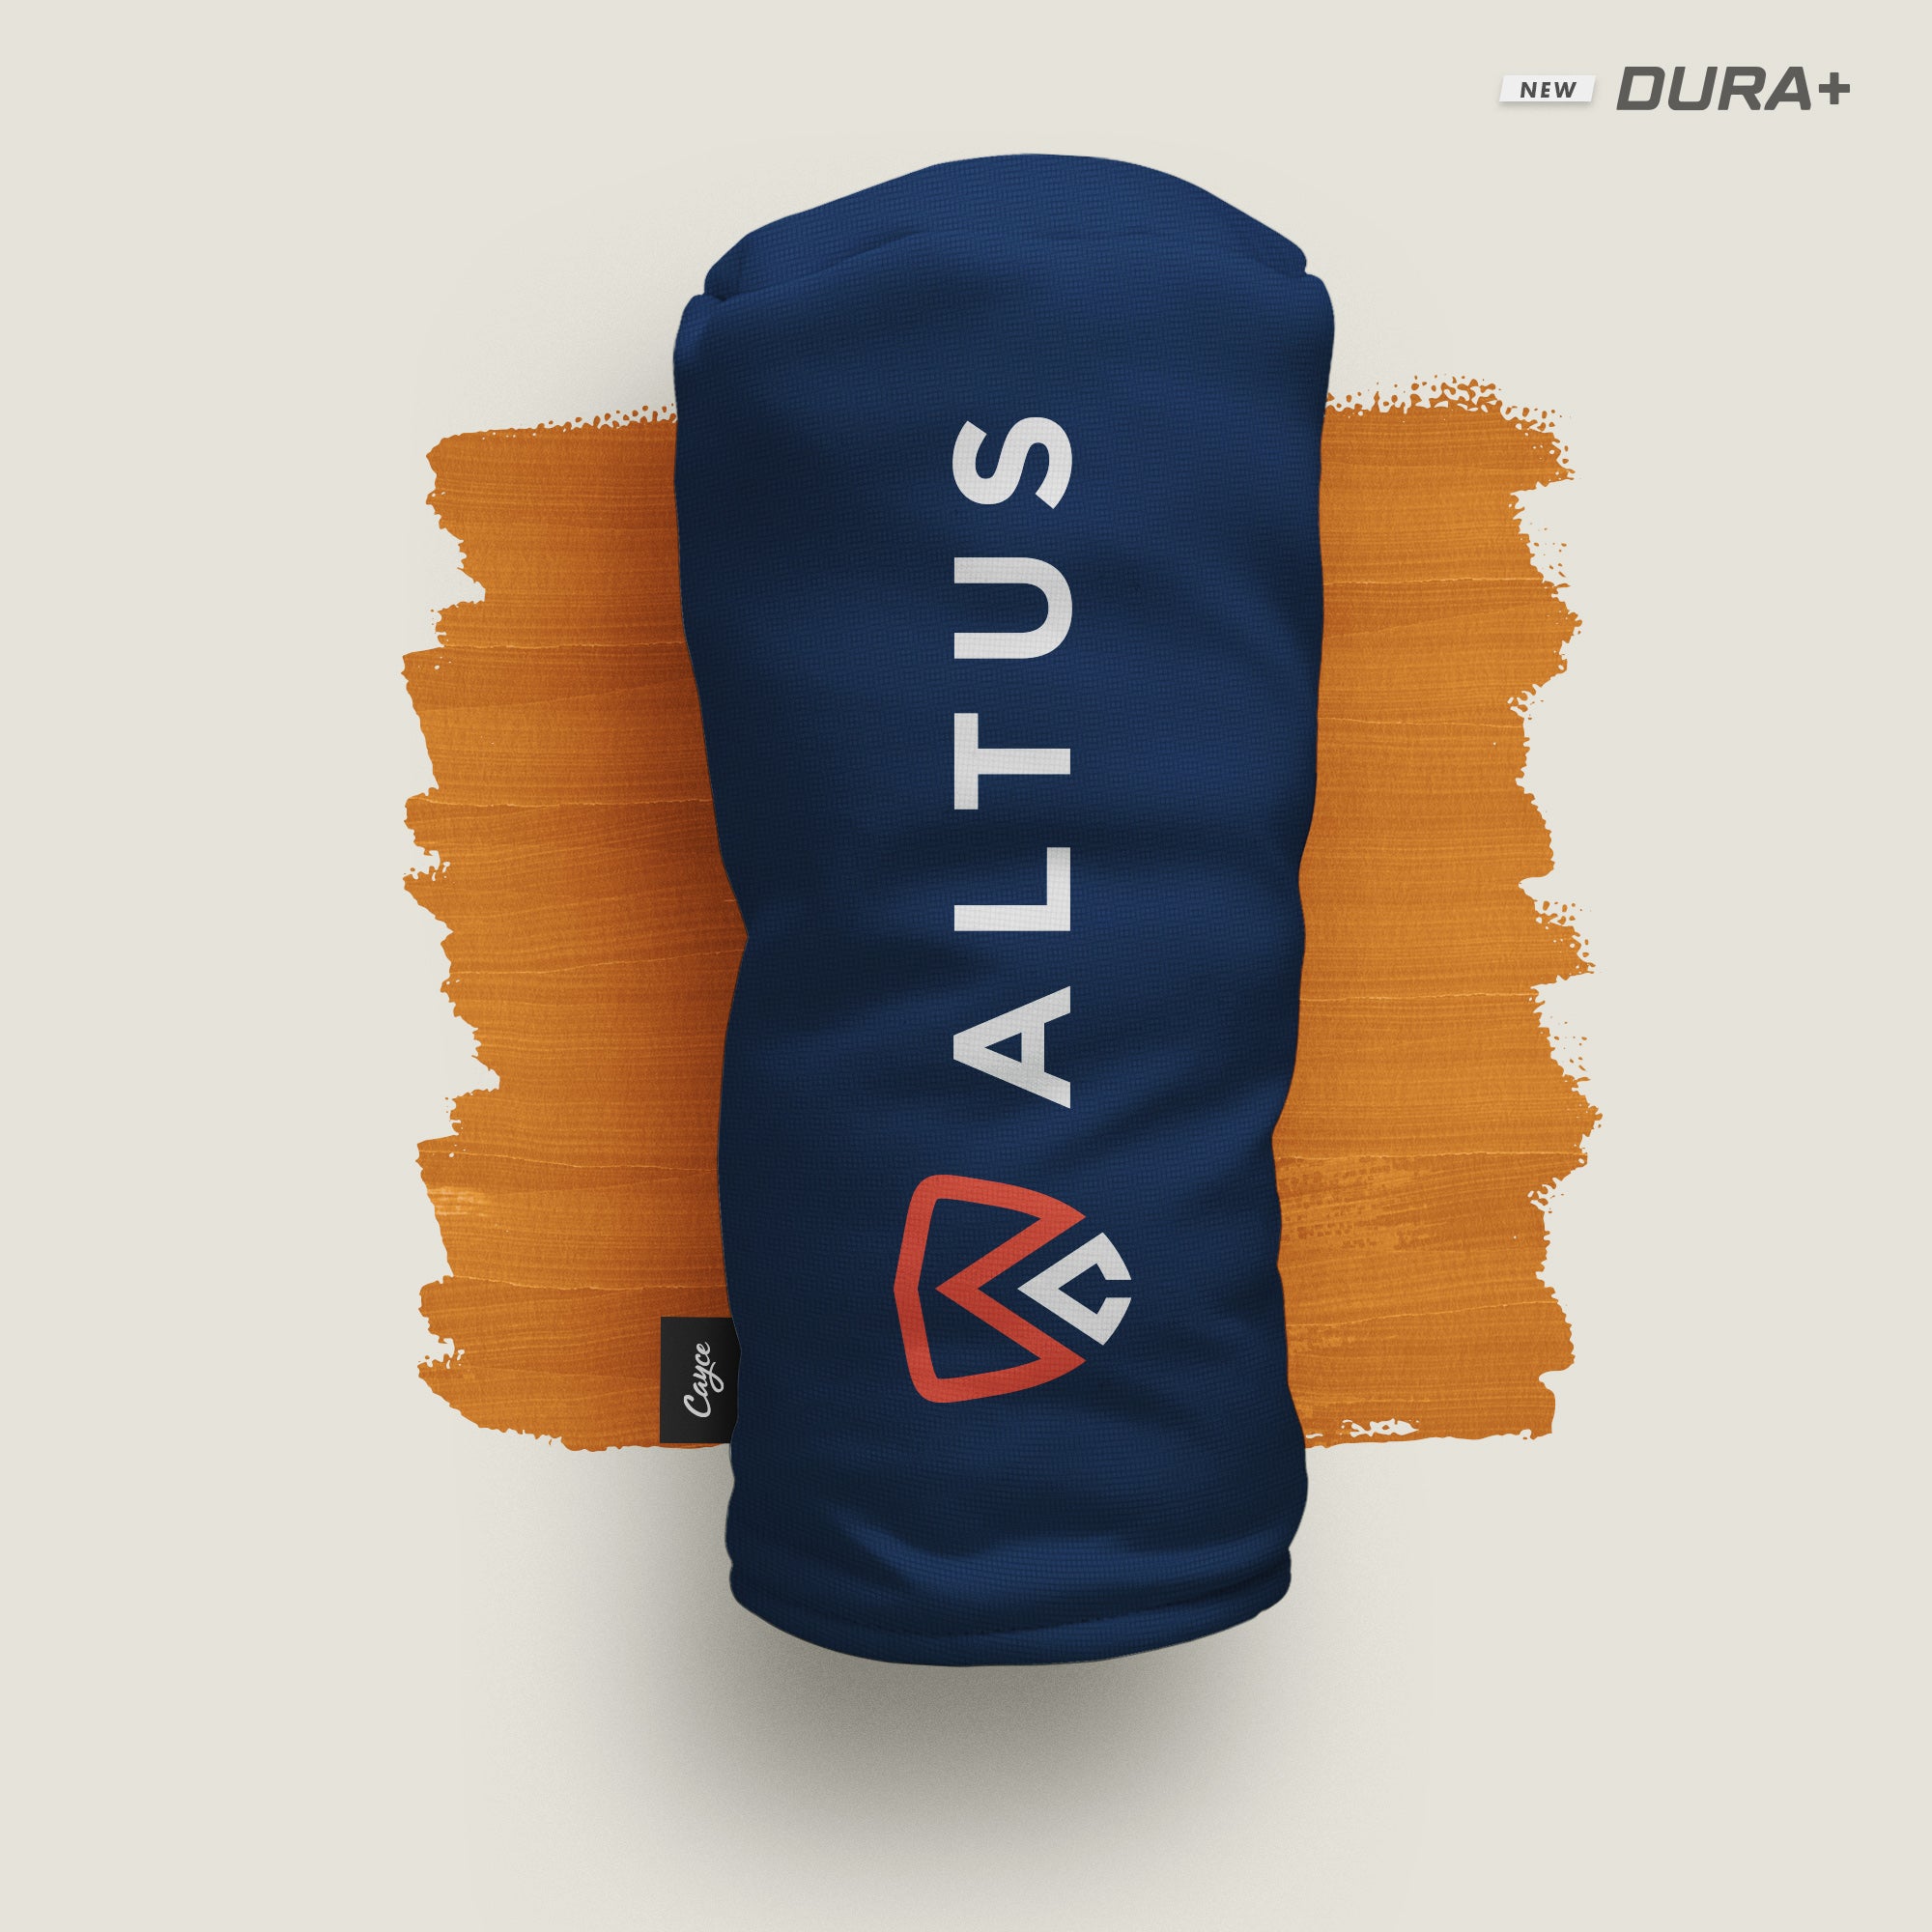 Navy custom golf head cover for the world-famous ALTUS Performance golf training facilities